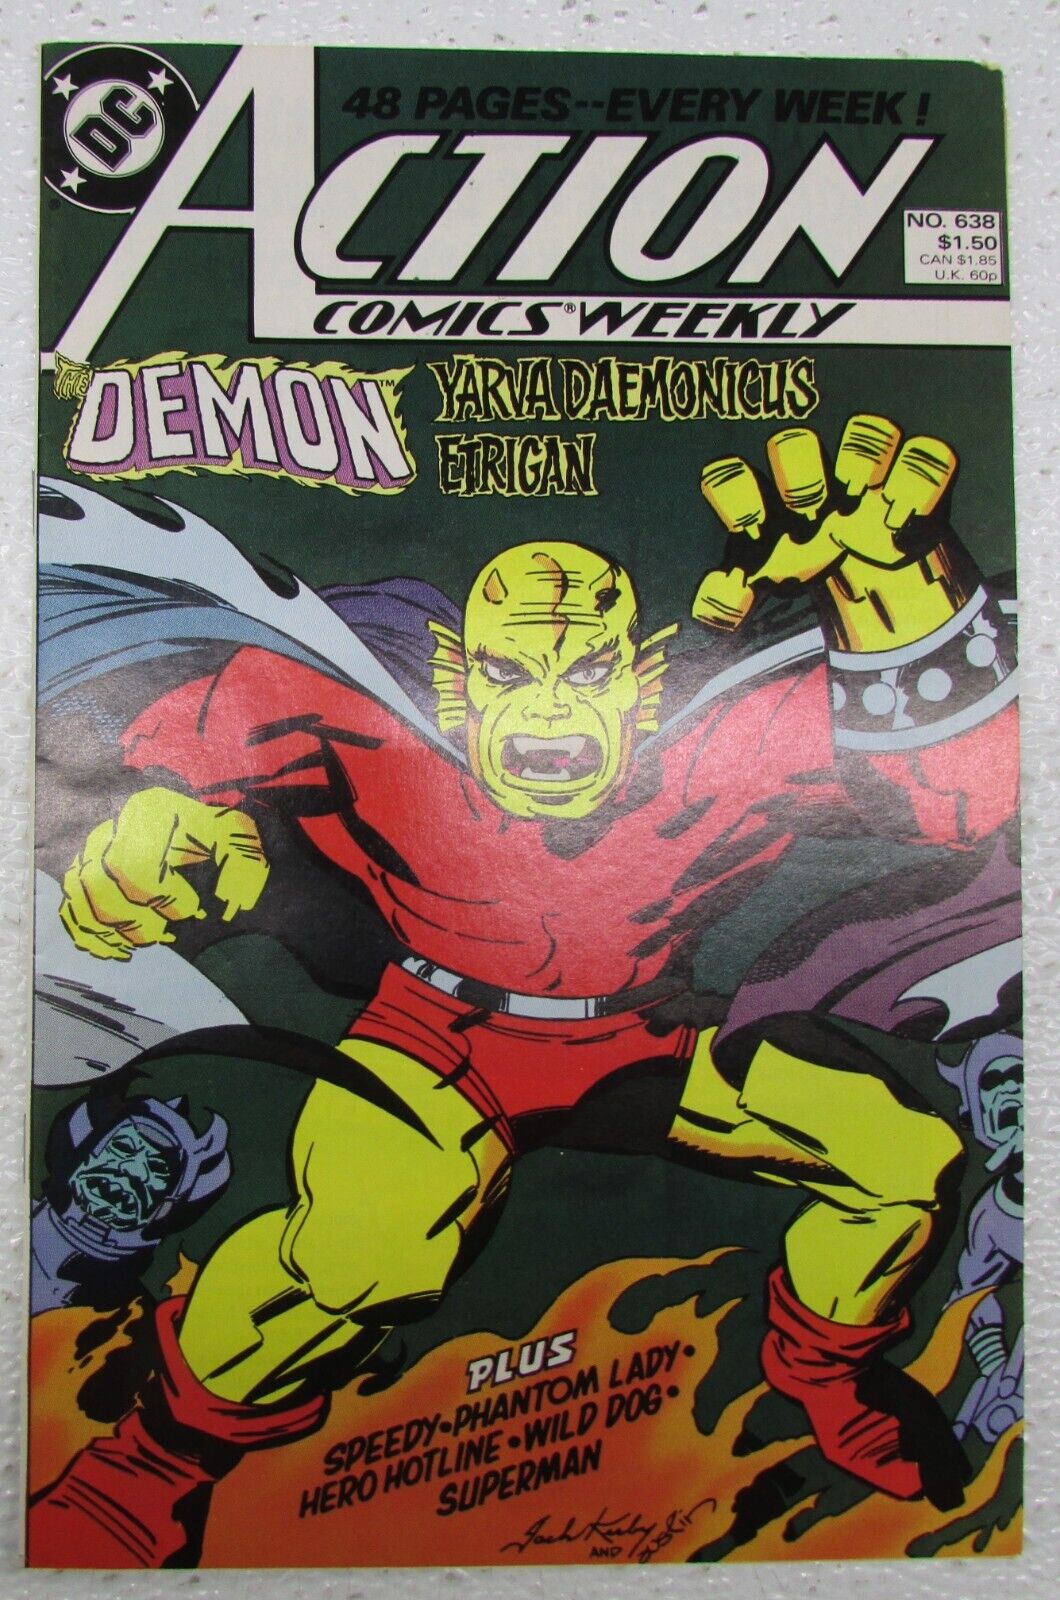 DC COMIC BOOK ACTION COMICS WEEKLY DEMON YARVA DAEMONICUS ETRIGAN #638 FEB 1989